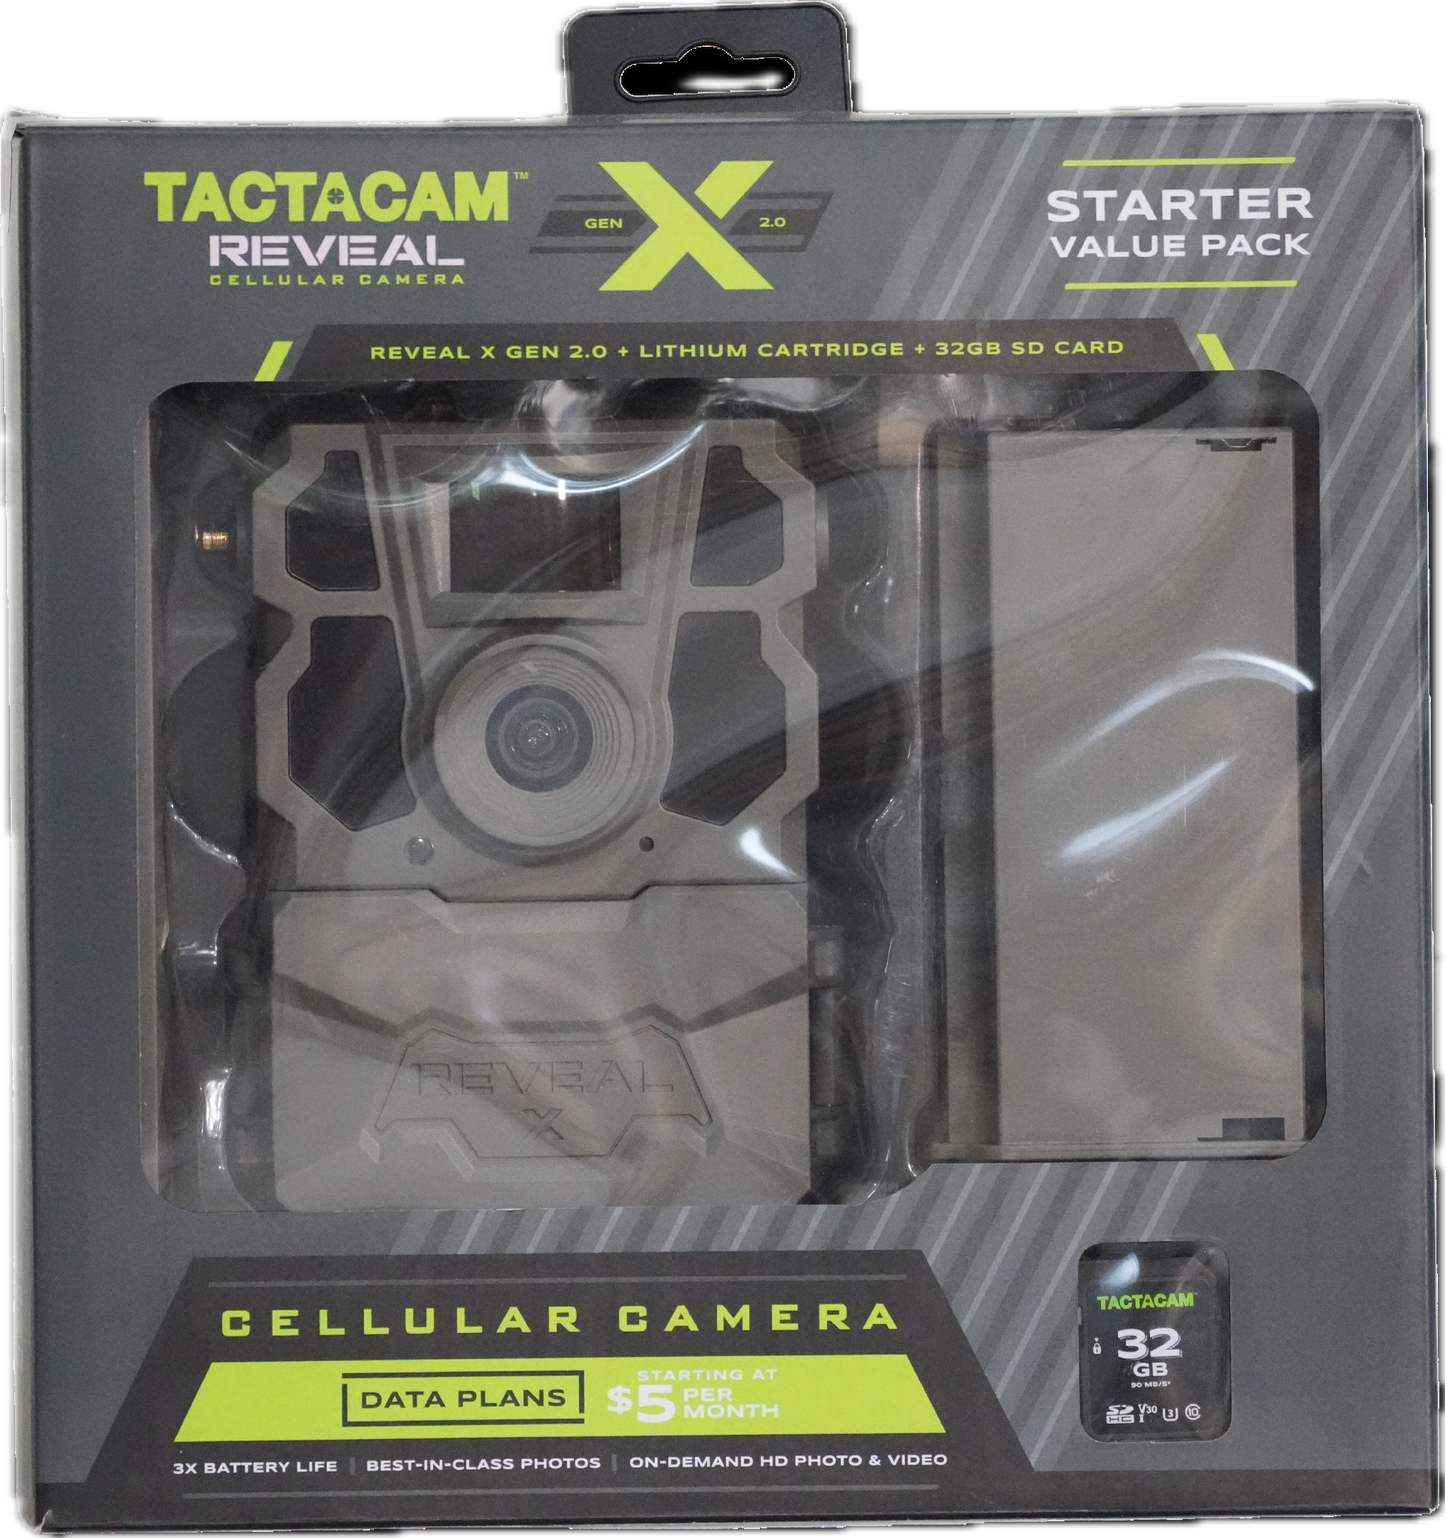 Tactacam REVEAL X 2.0 + Lithium Cartridge + 32GB SD Card Bundle